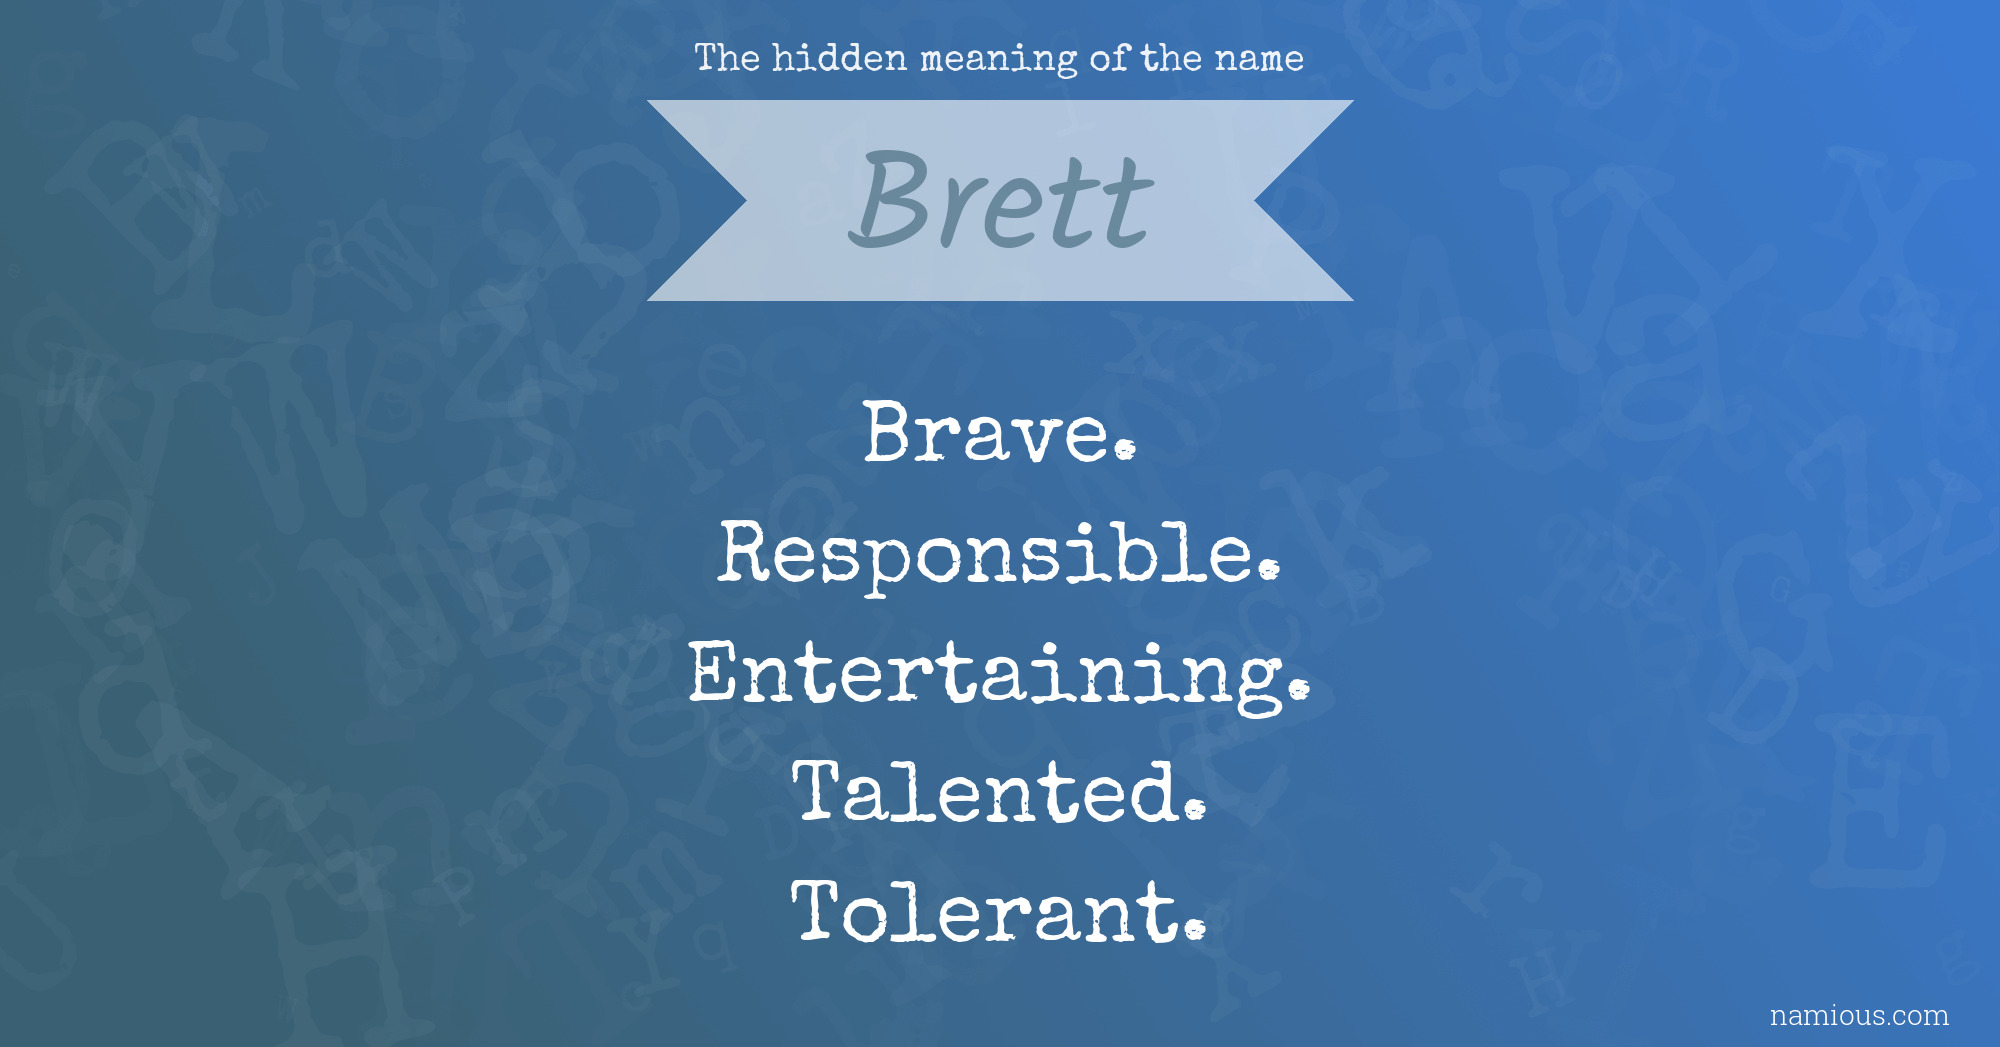 The hidden meaning of the name Brett